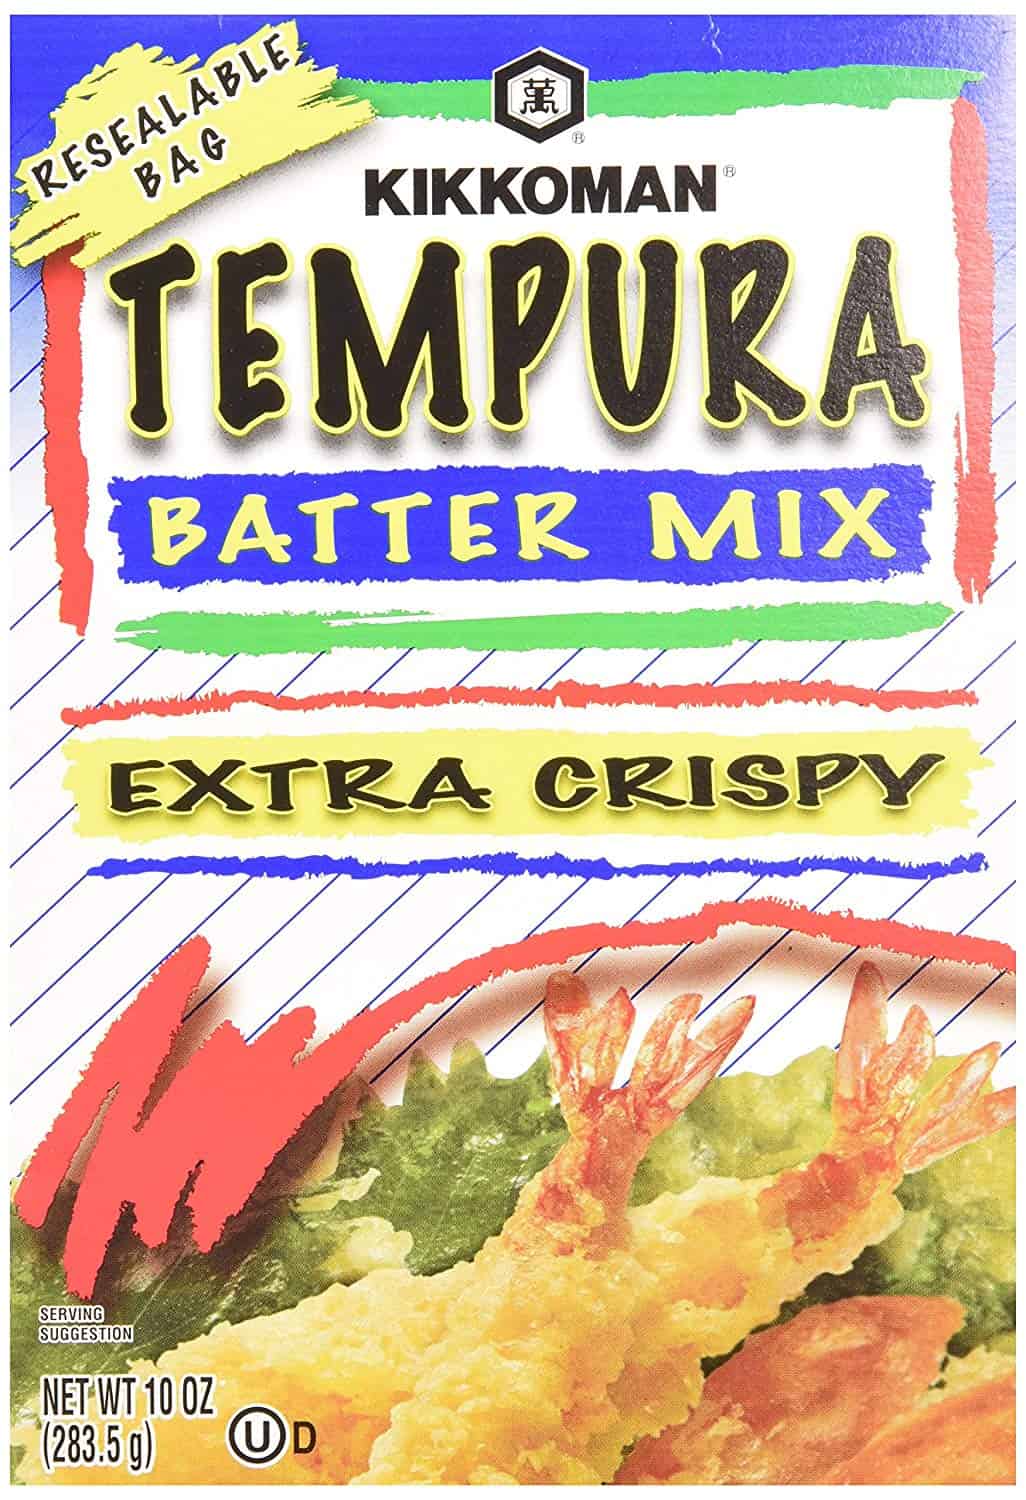 Kikkoman tempura batter mix